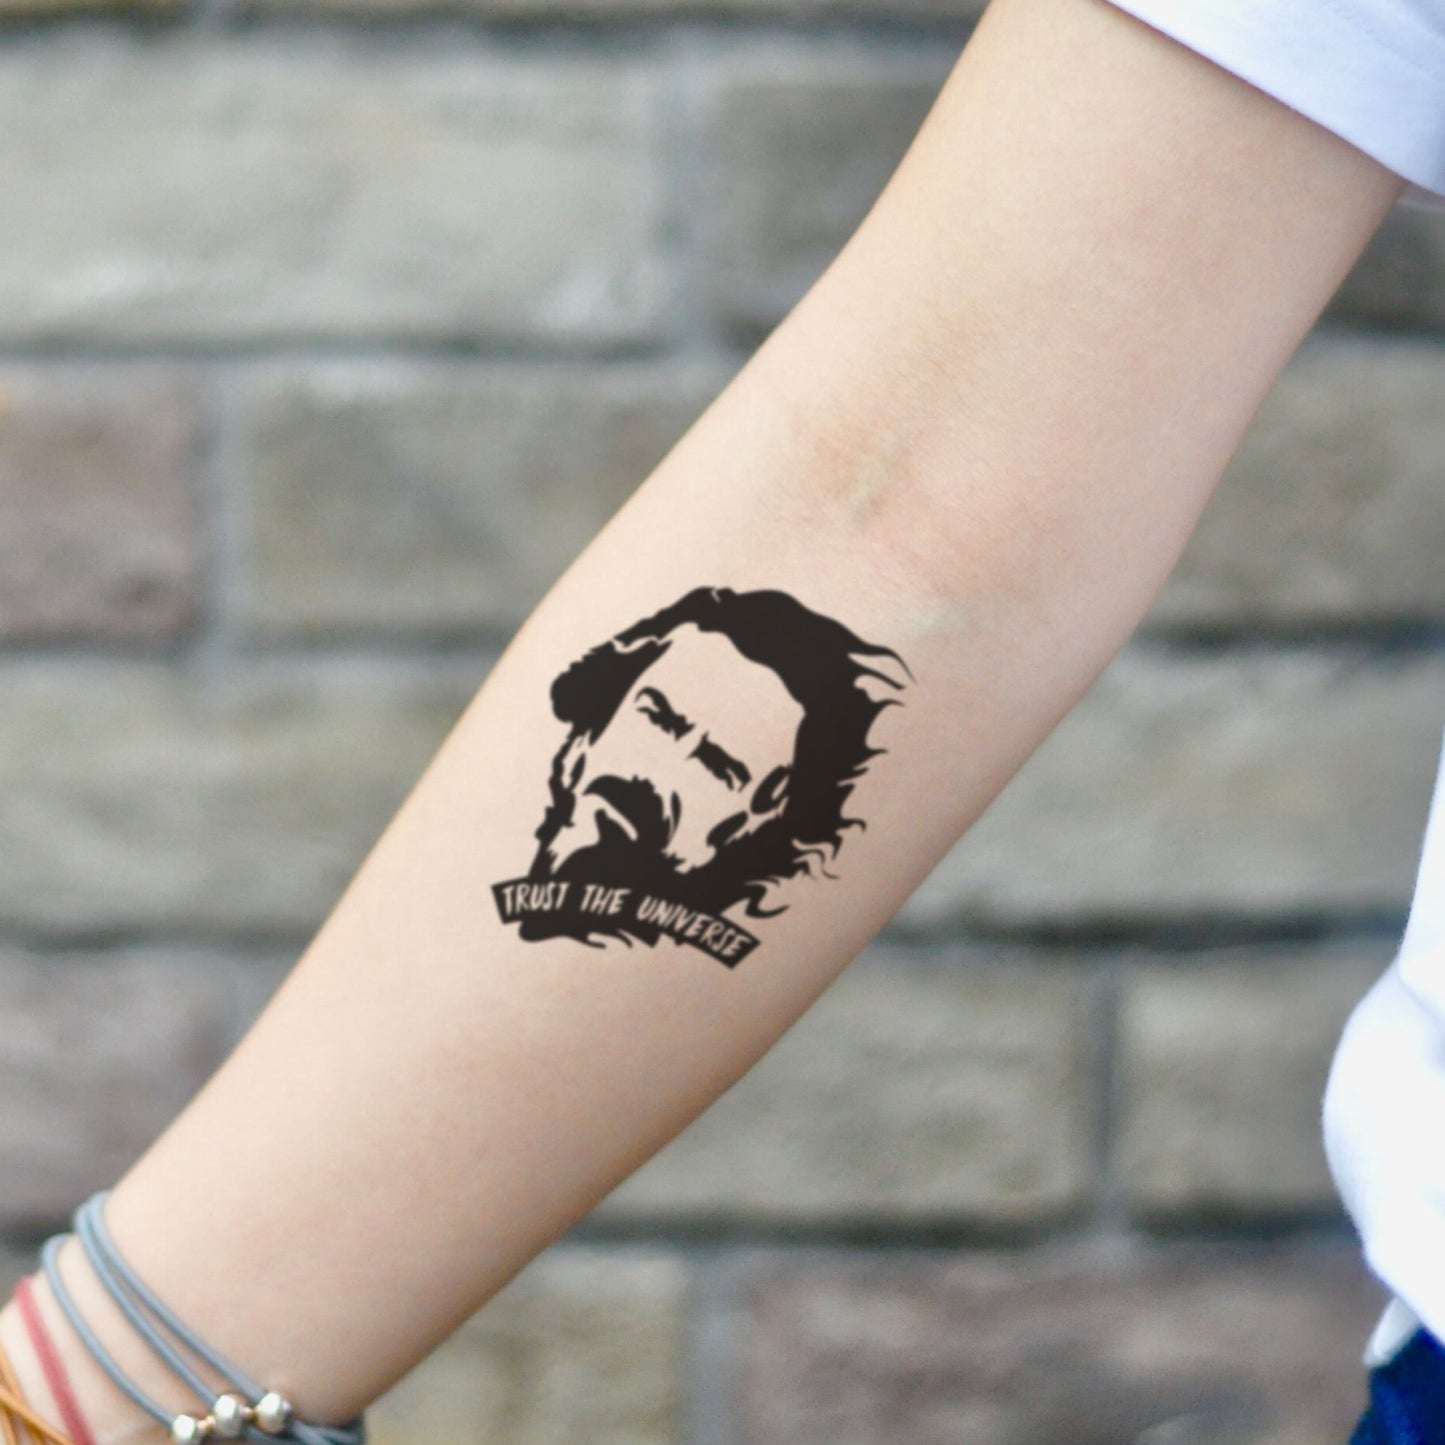 fake small alan watts portrait temporary tattoo sticker design idea on inner arm